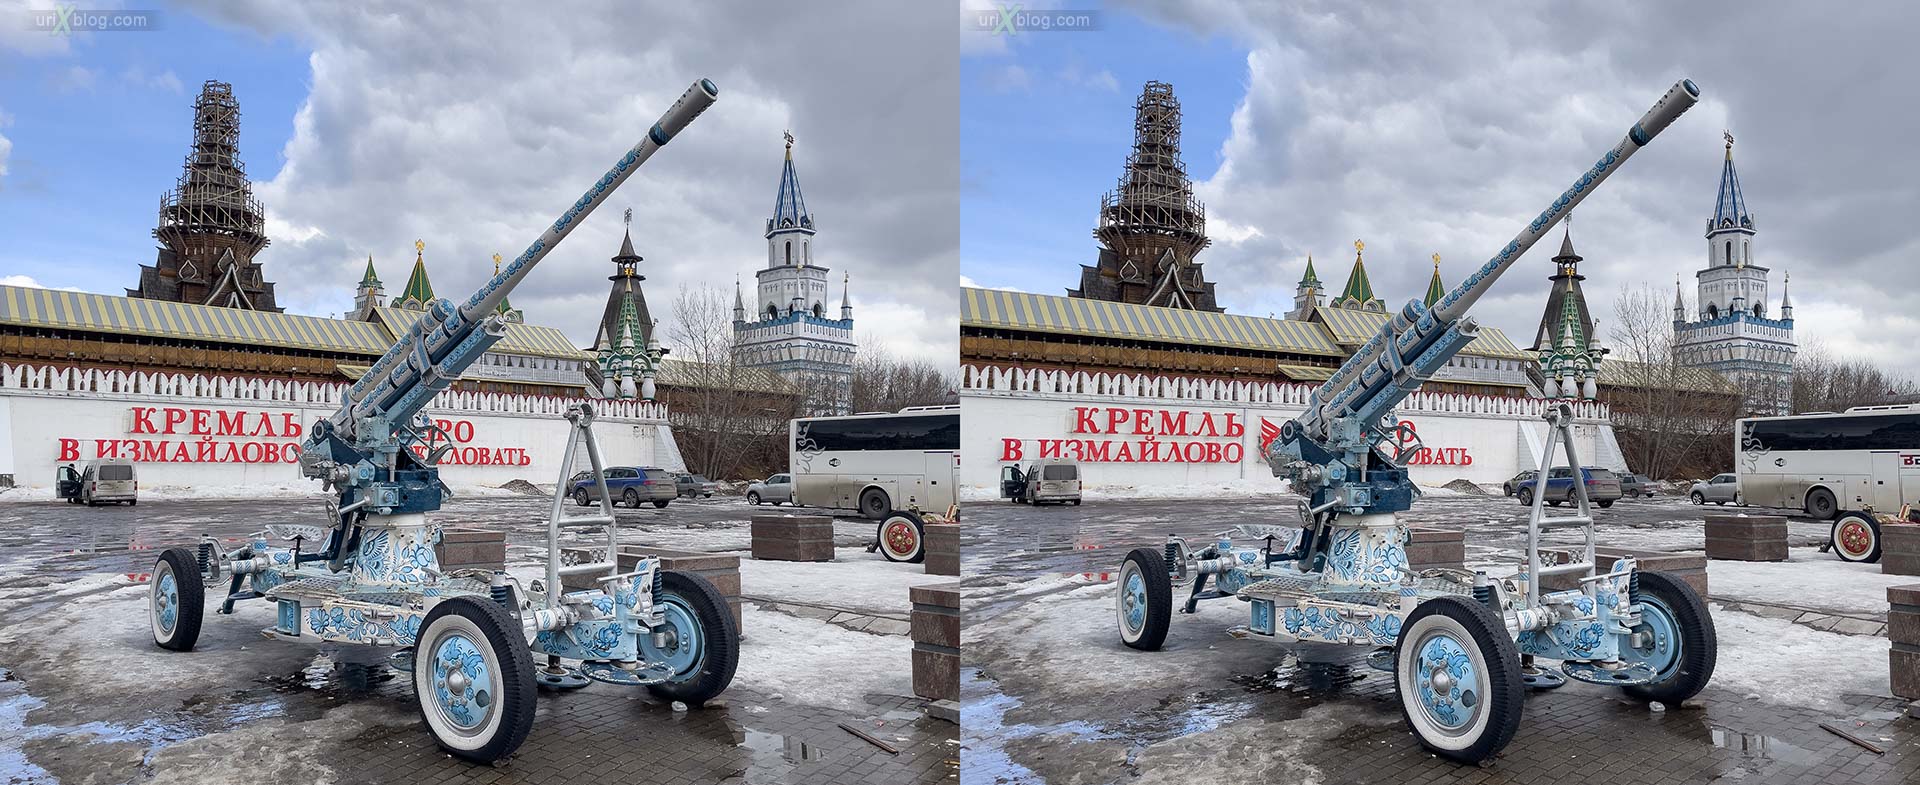 Anti-aircraft gun, Izmailovsky Kremlin, Gzhel, Moscow, Russia, 3D, stereo pair, cross-eyed, crossview, cross view stereo pair, stereoscopic